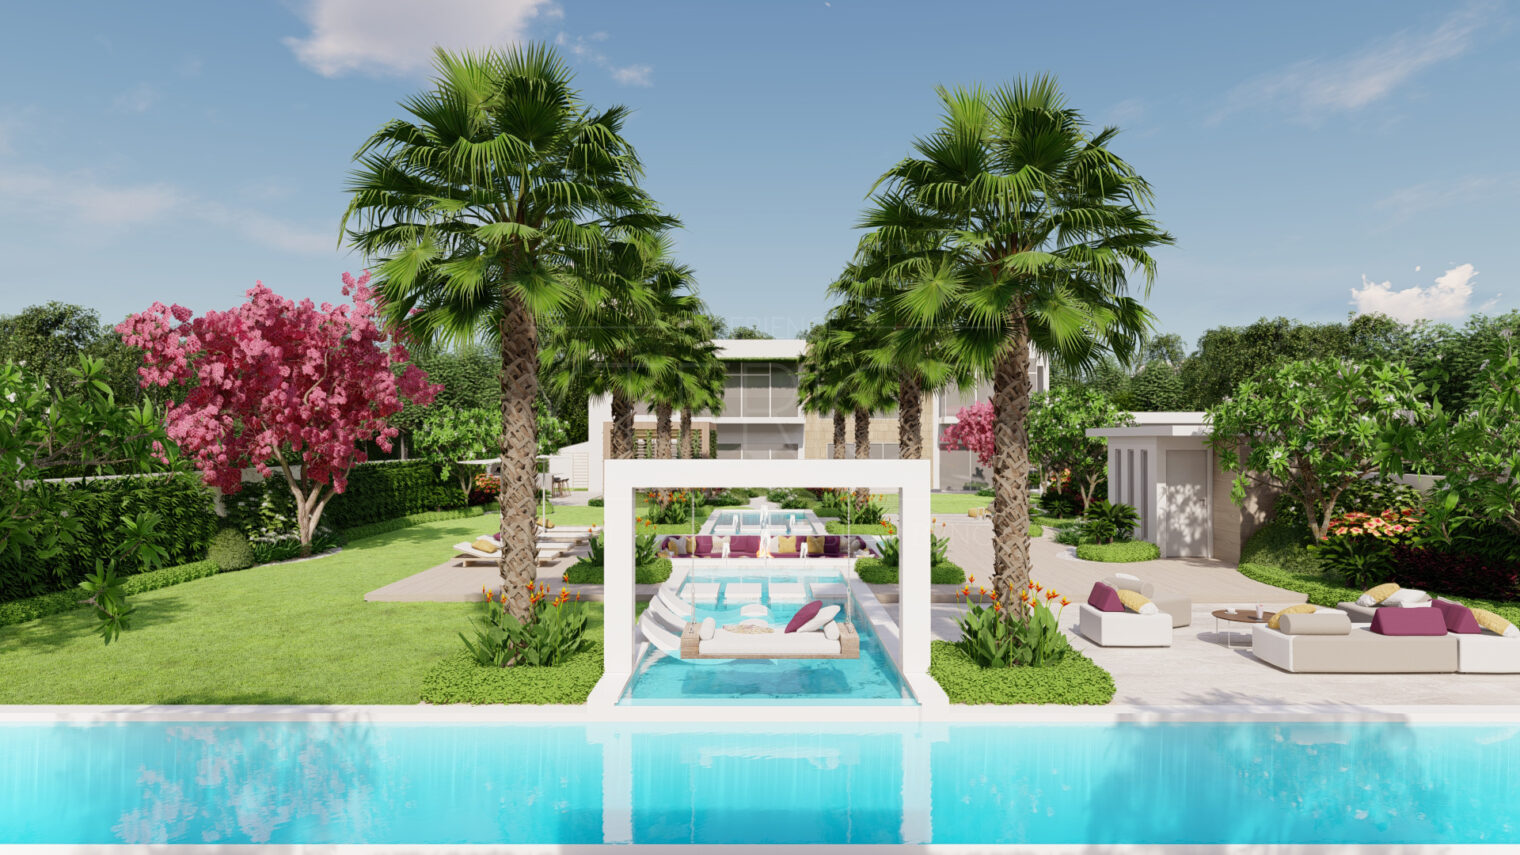 Al-Barari-Dubai-garden-pool-ideas-landscape-contractors-dubai